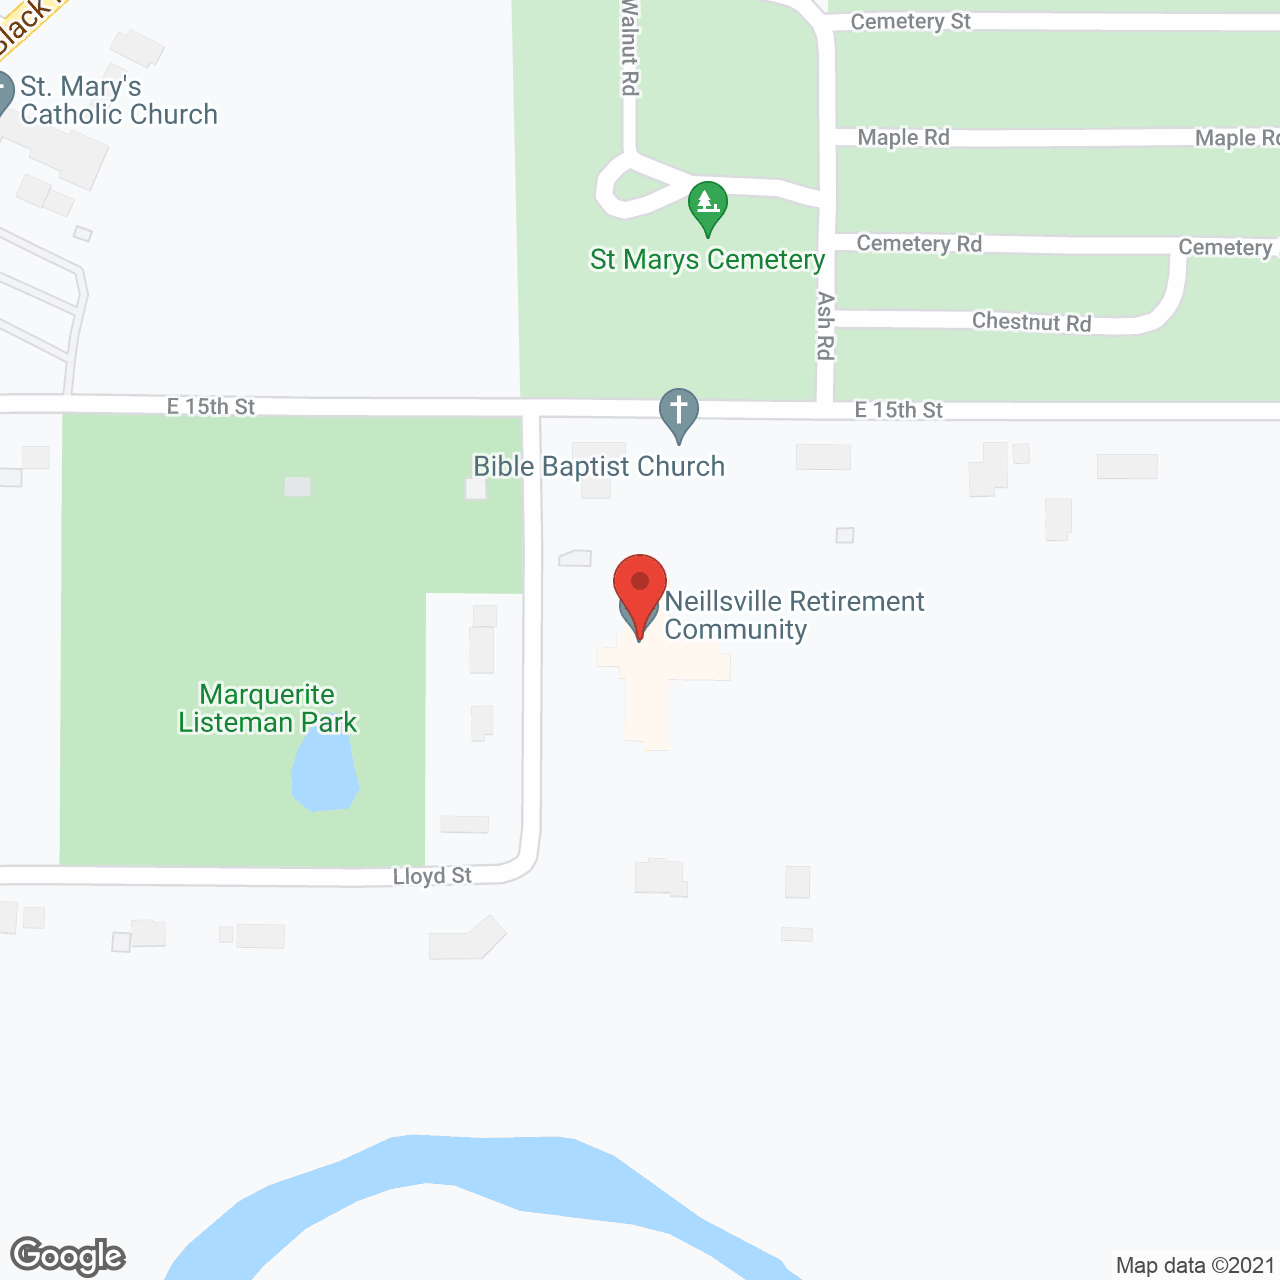 Neillsville Retirement Community in google map